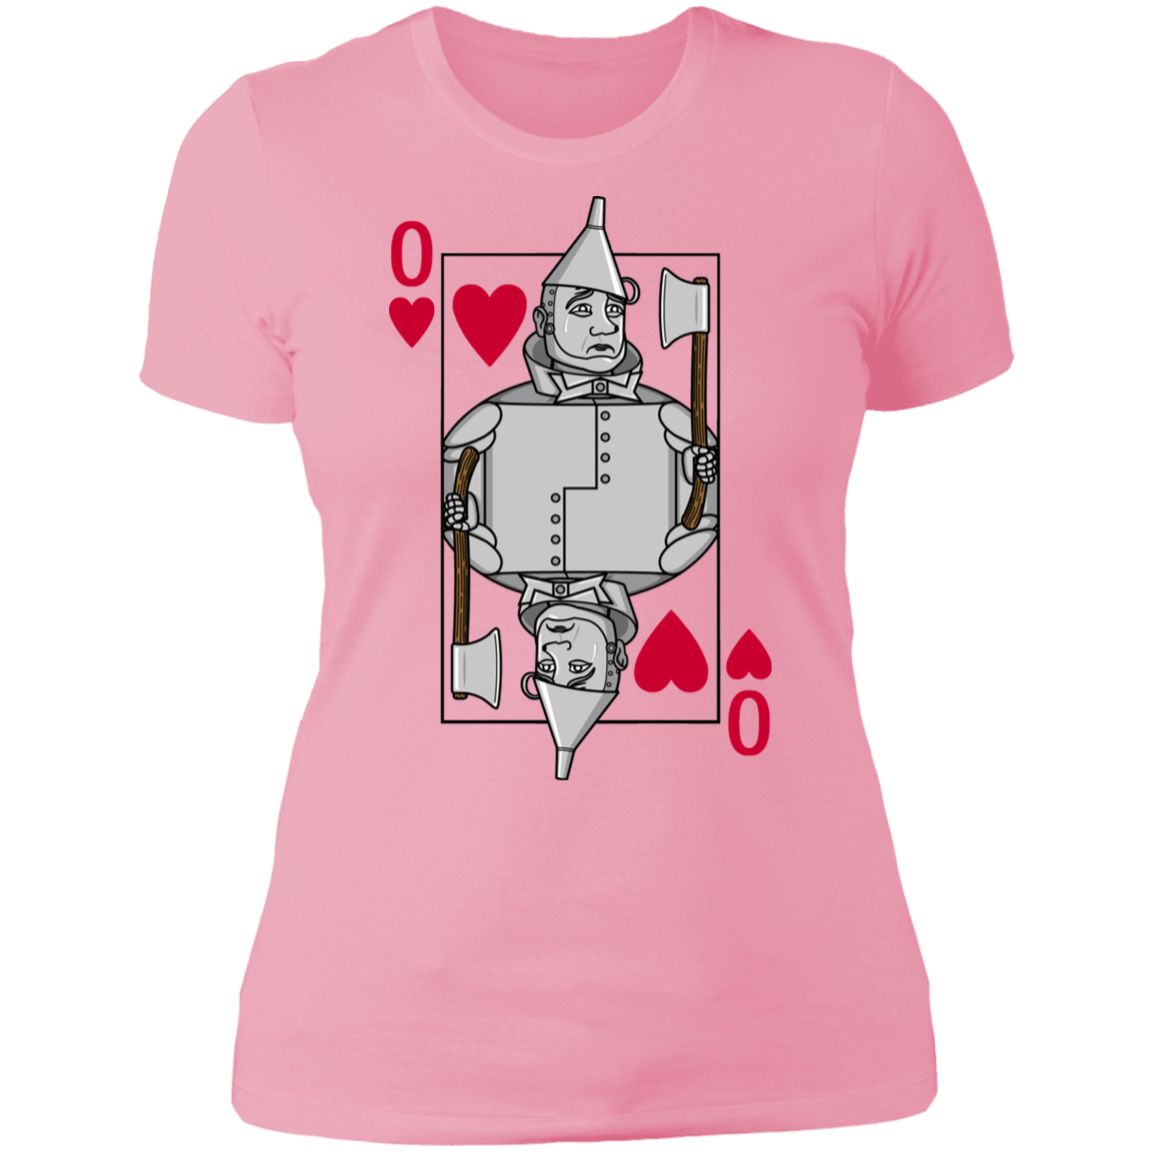 T-Shirts Light Pink / S 0 Of Hearts Women's Premium T-Shirt